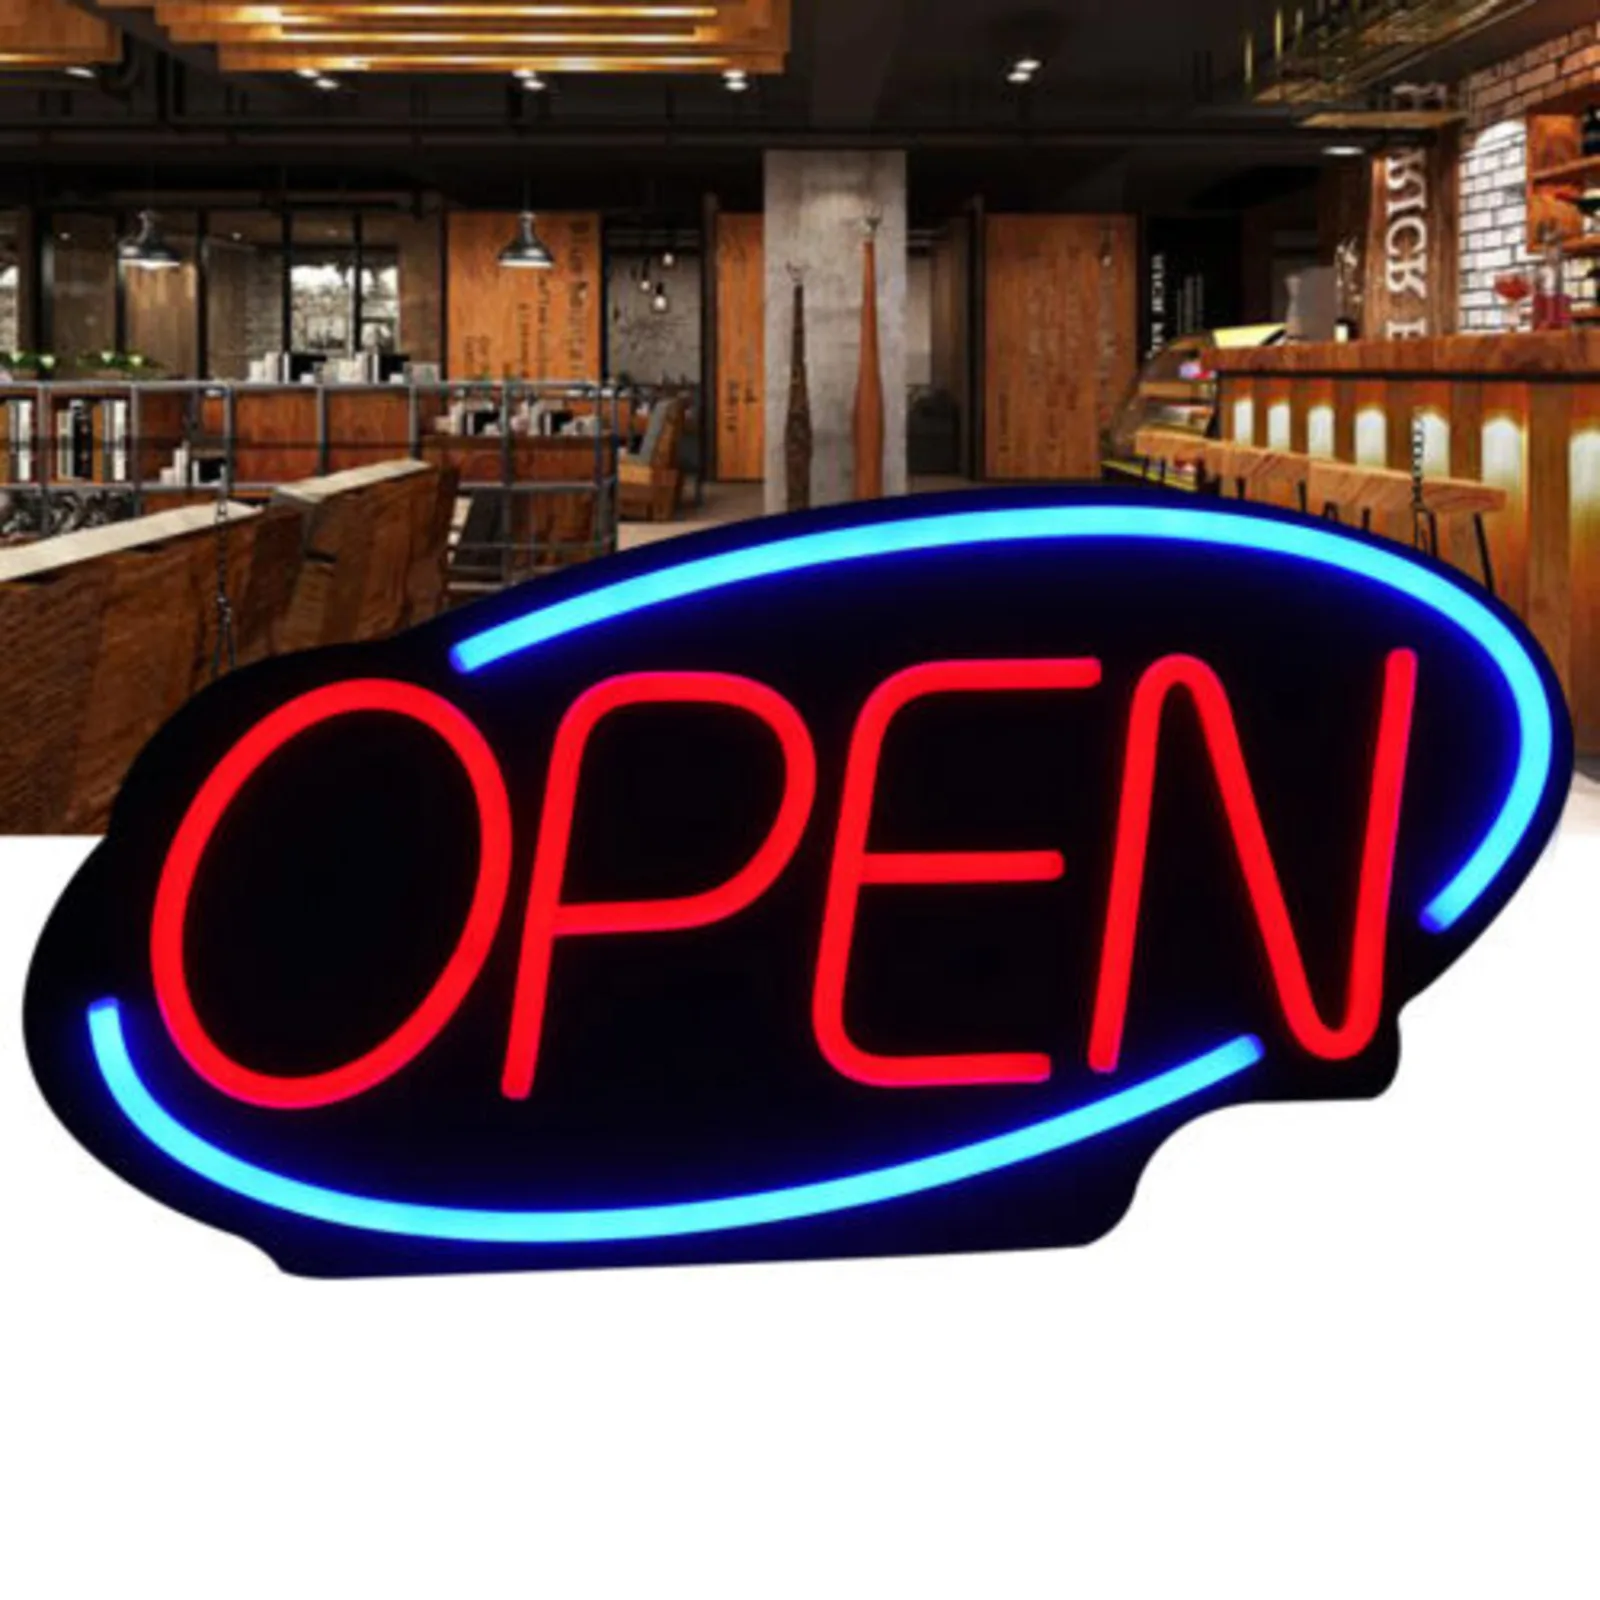 senal-abierta-led-grande-luz-brillante-de-neon-para-decoracion-de-pared-exterior-bar-pub-restaurante